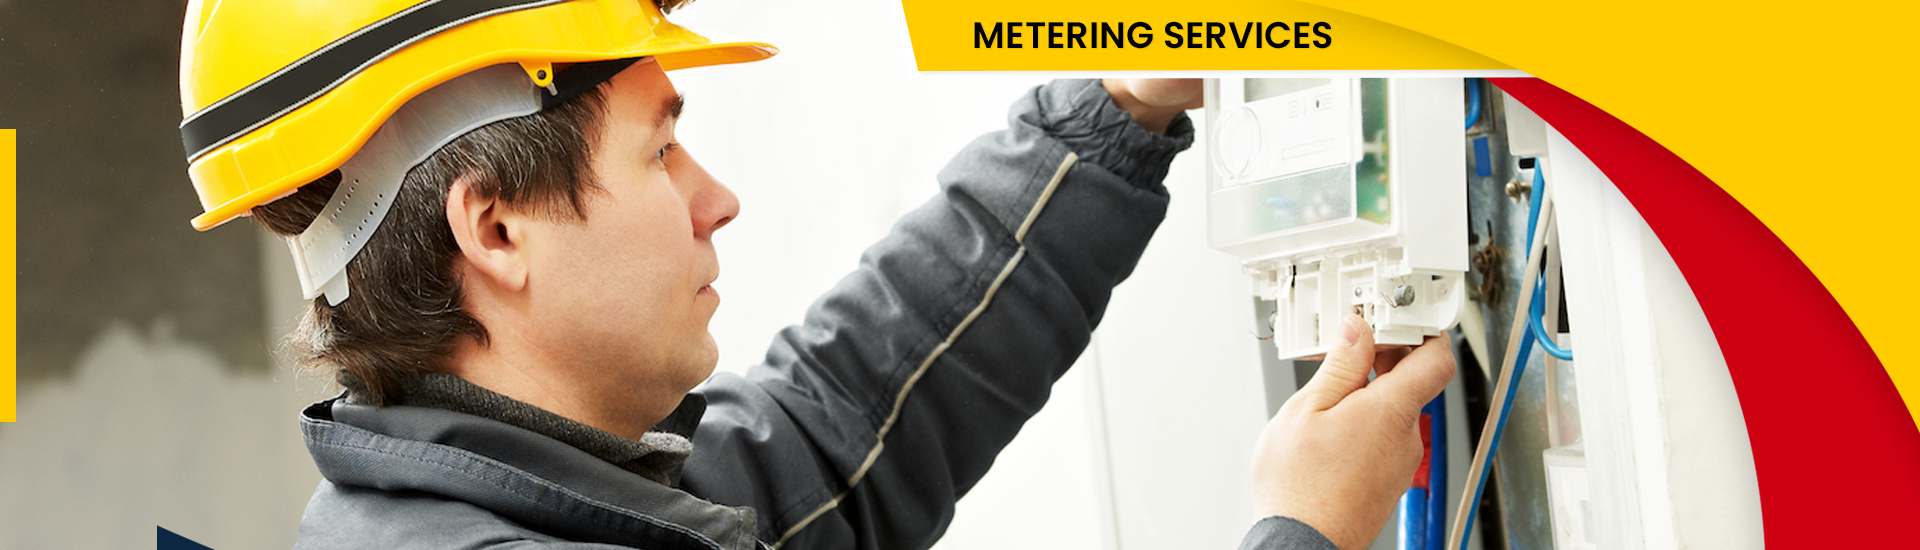 Metering Services